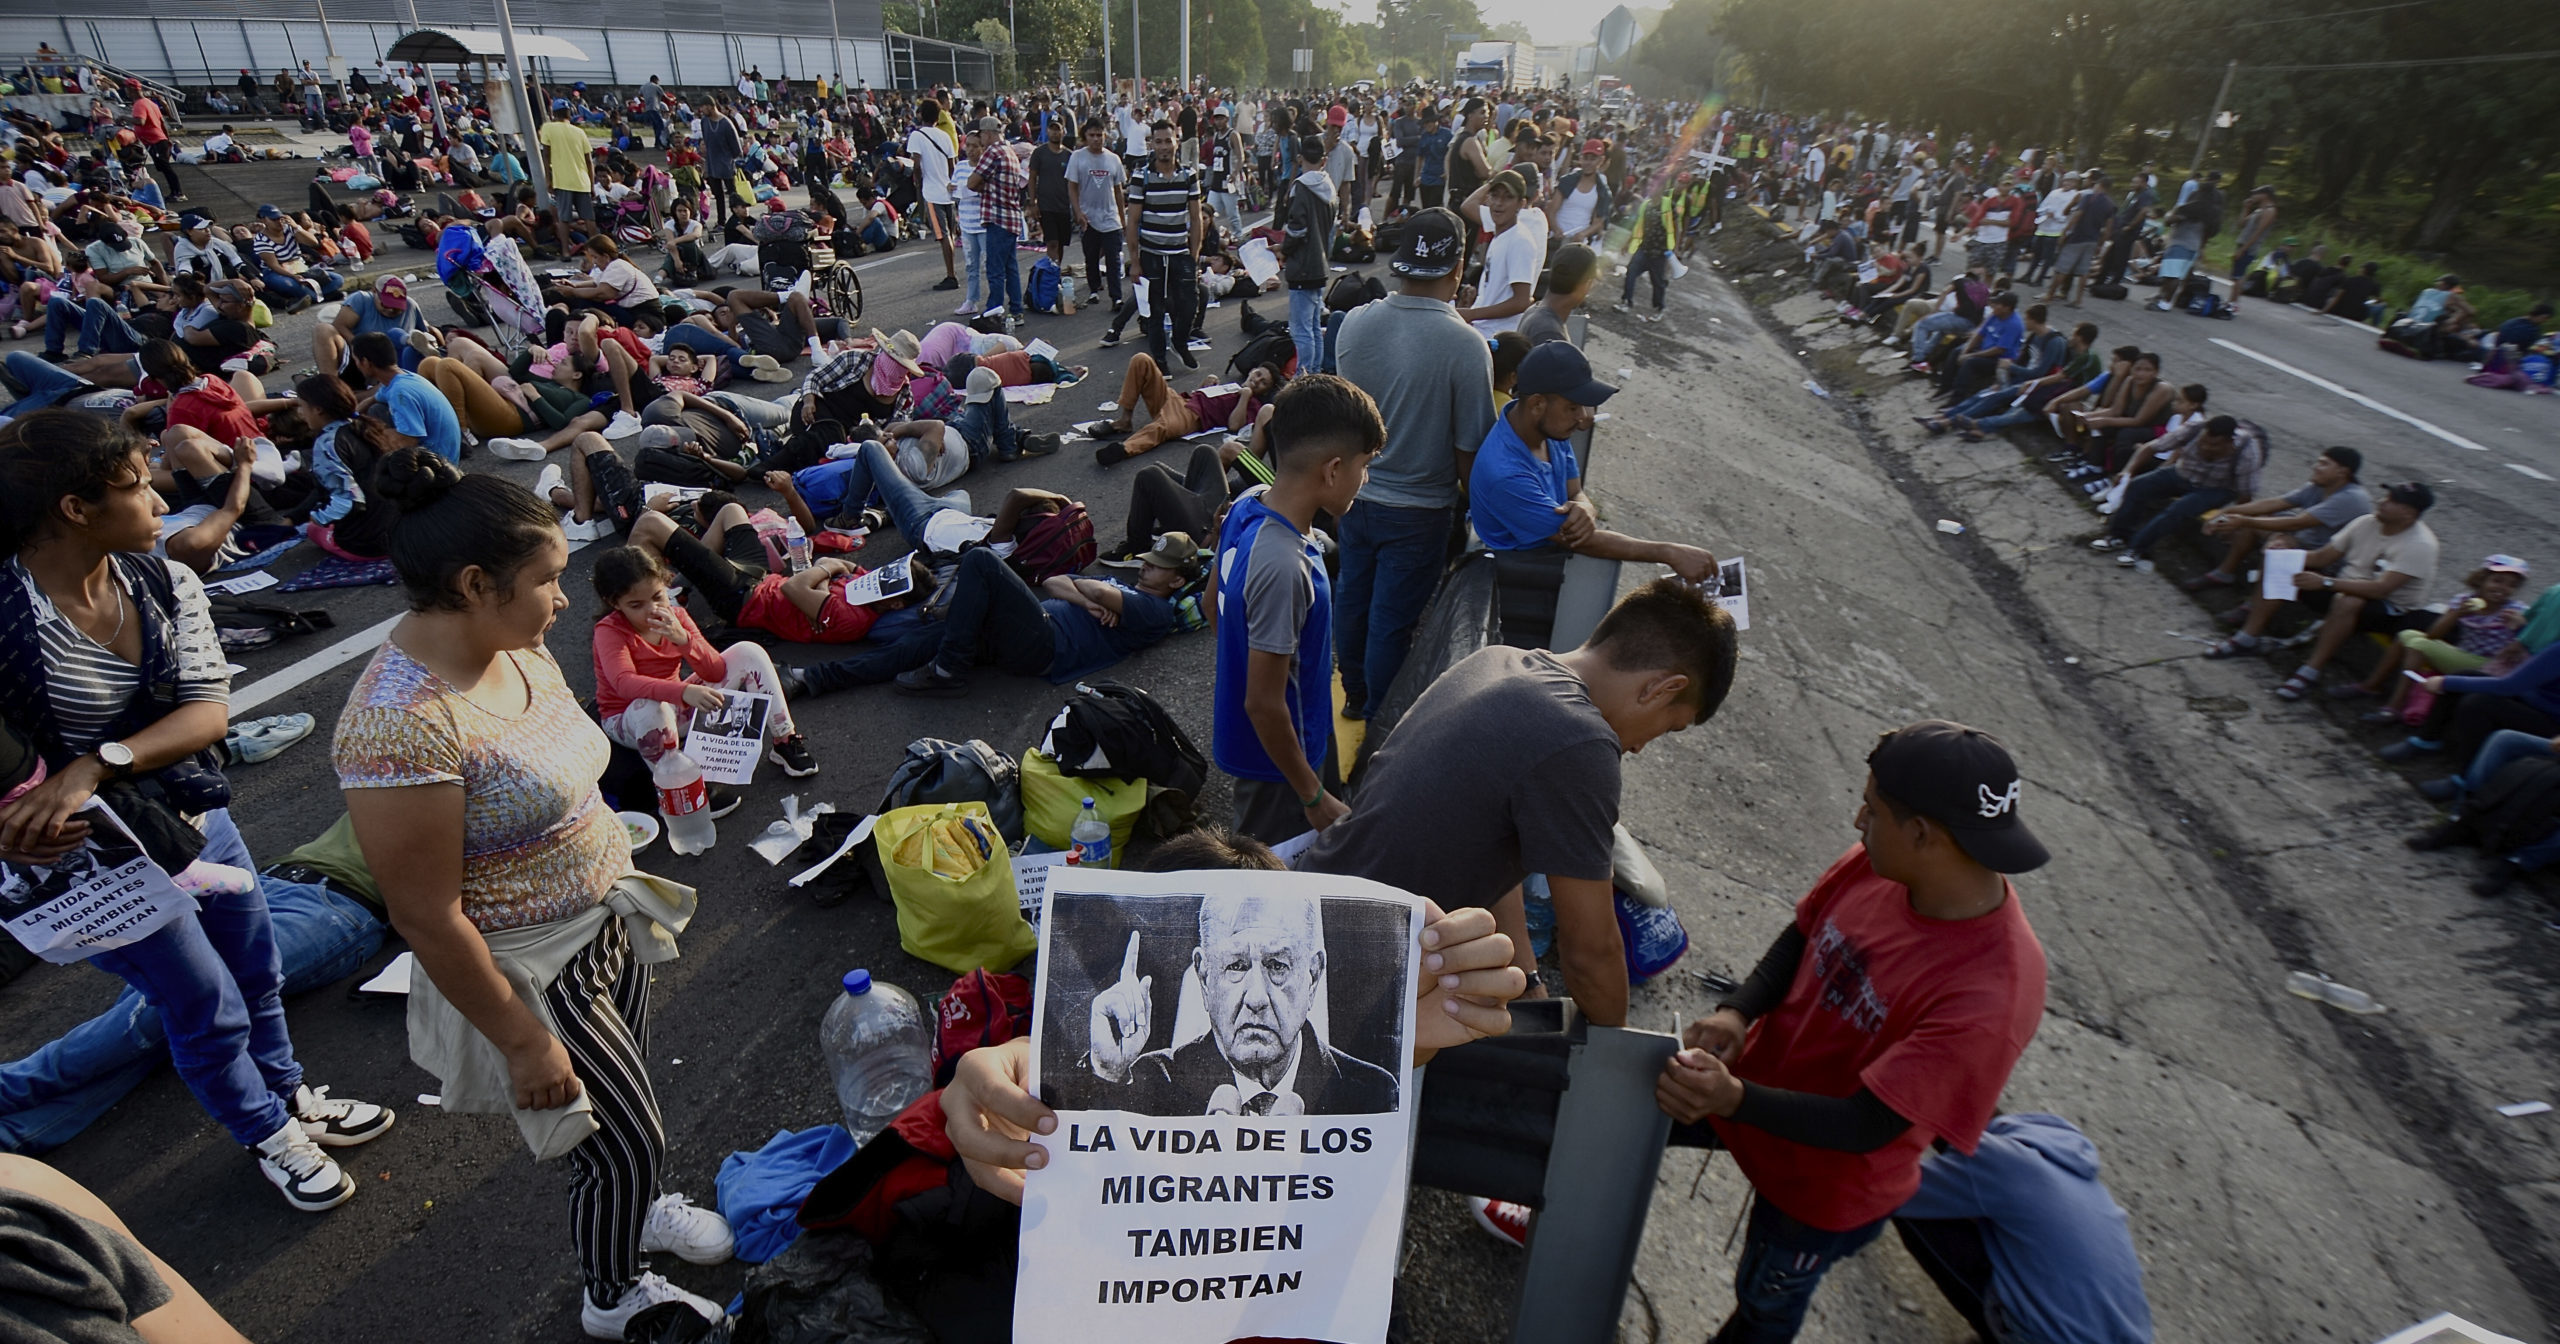 A migrant caravan heading for the U.S. stops to block a highway in Huixtla, Mexico, on Wednesday.